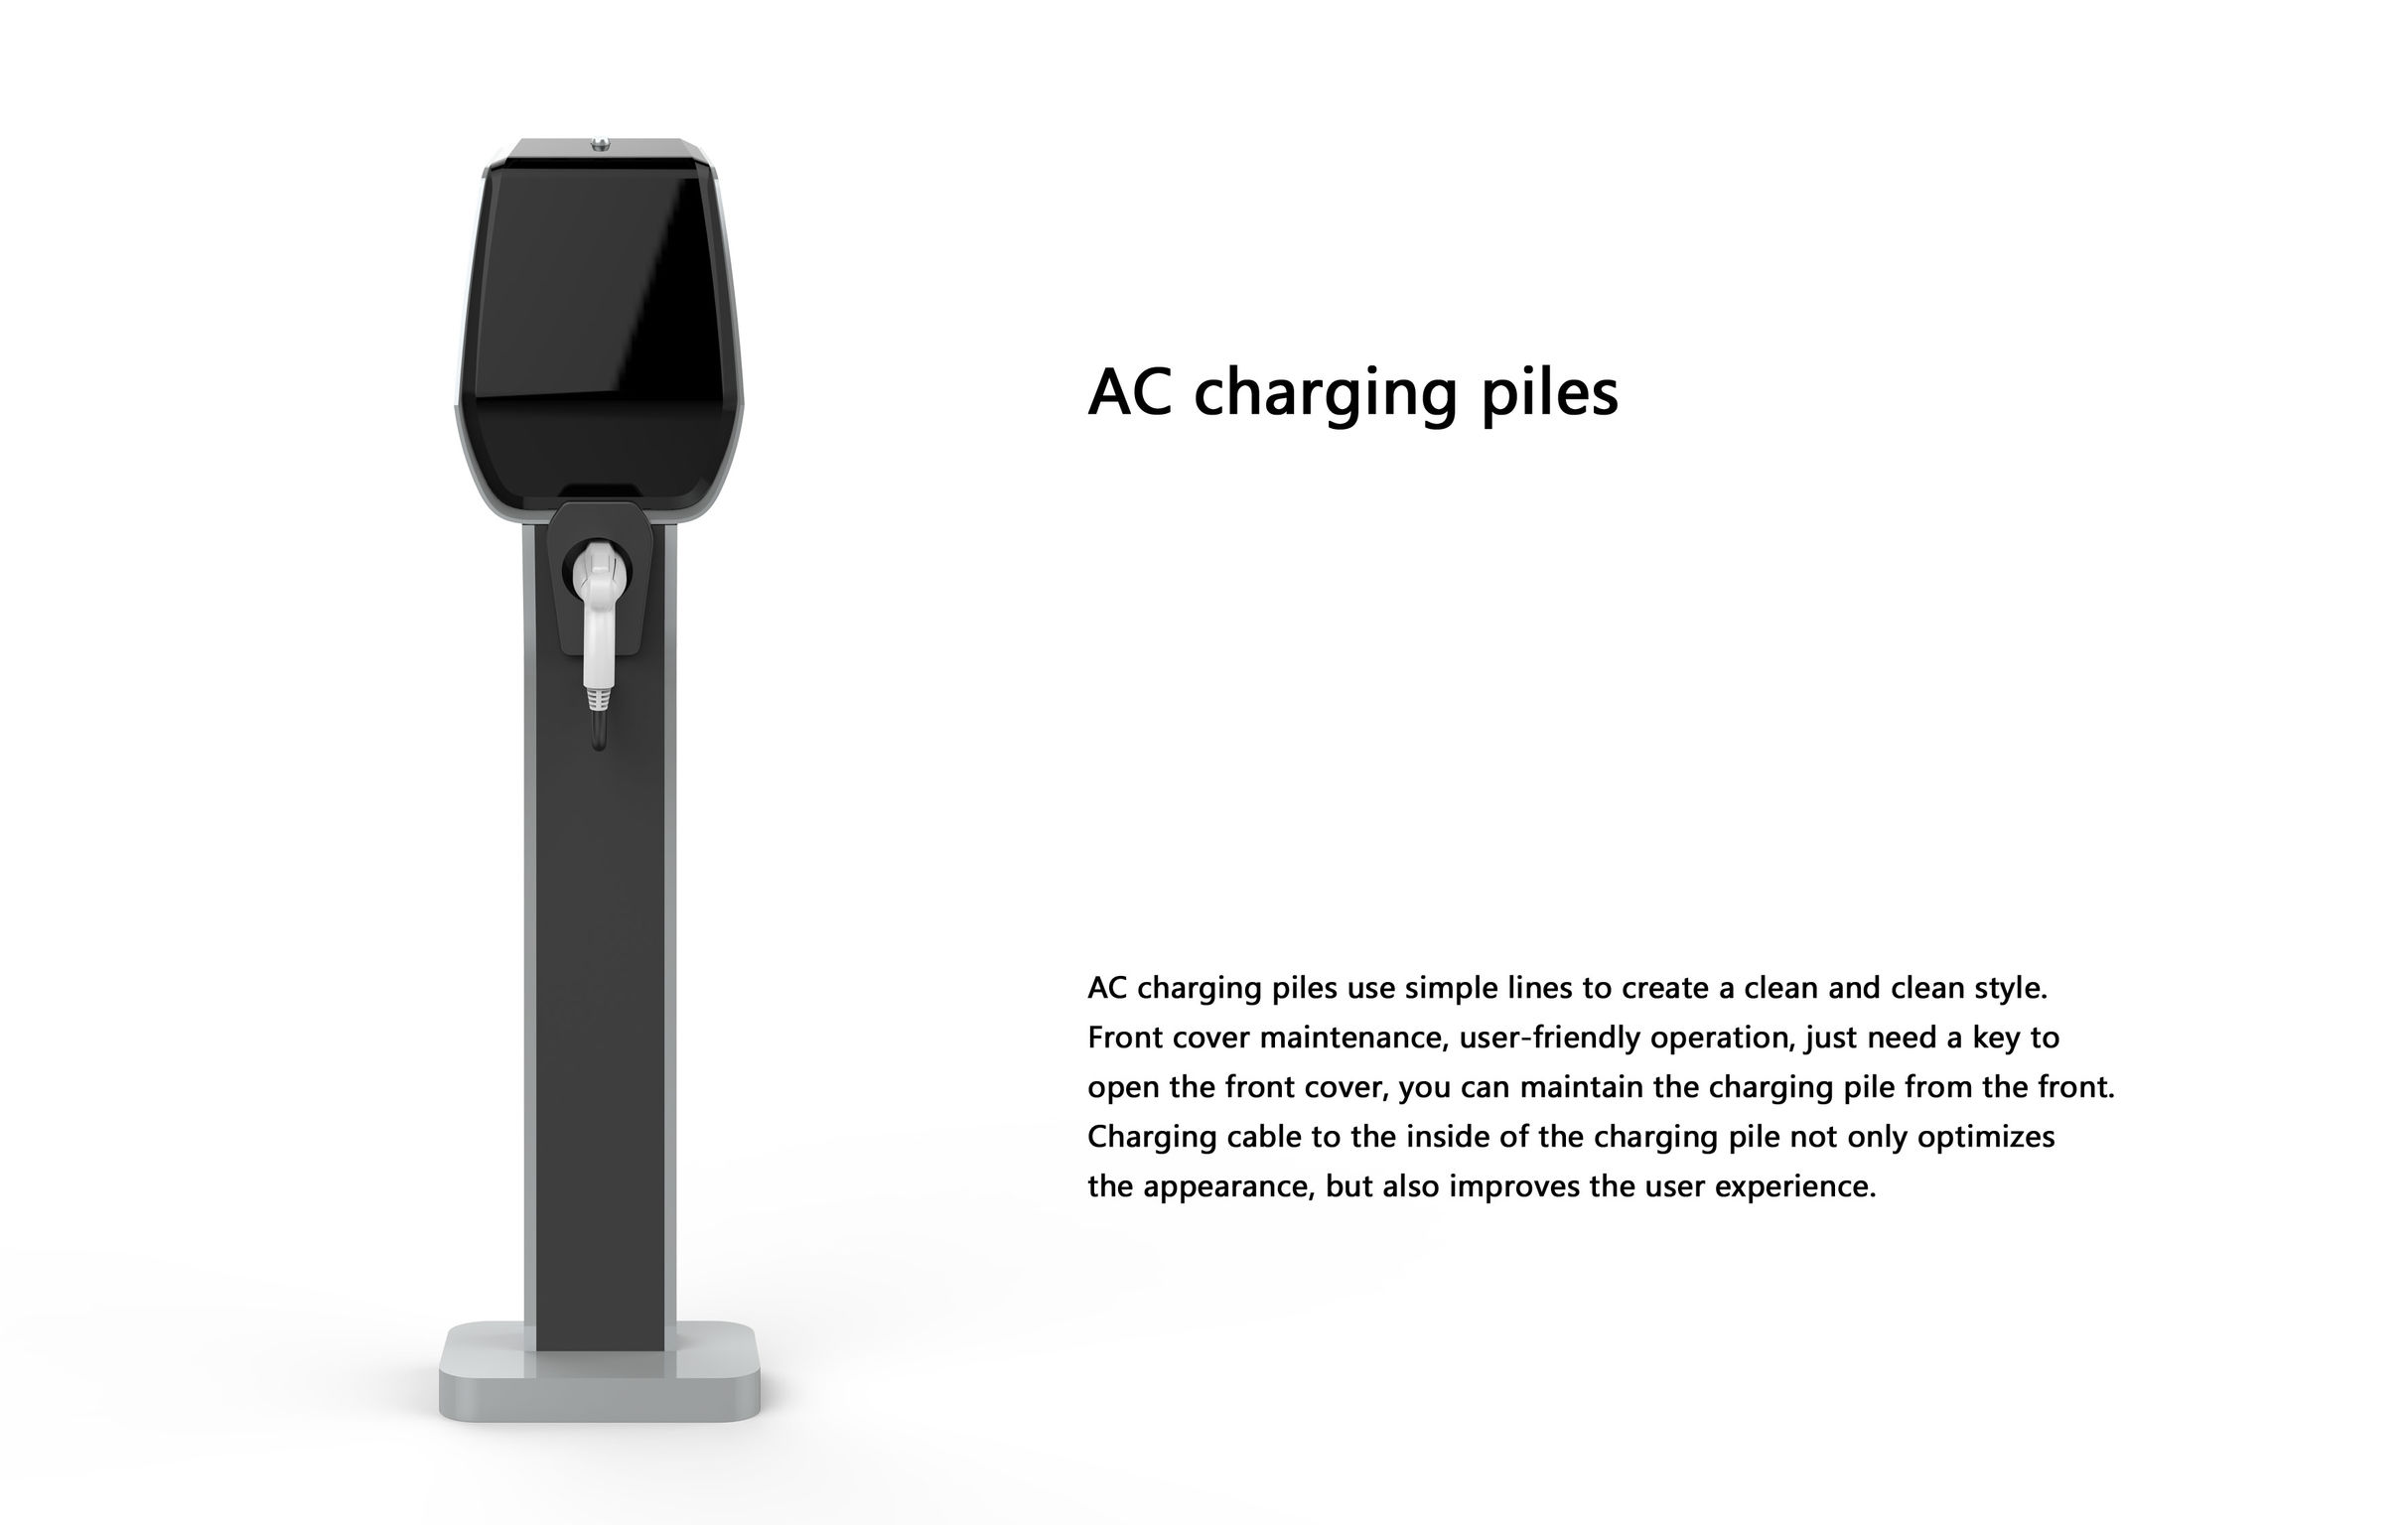 Ac charging pile